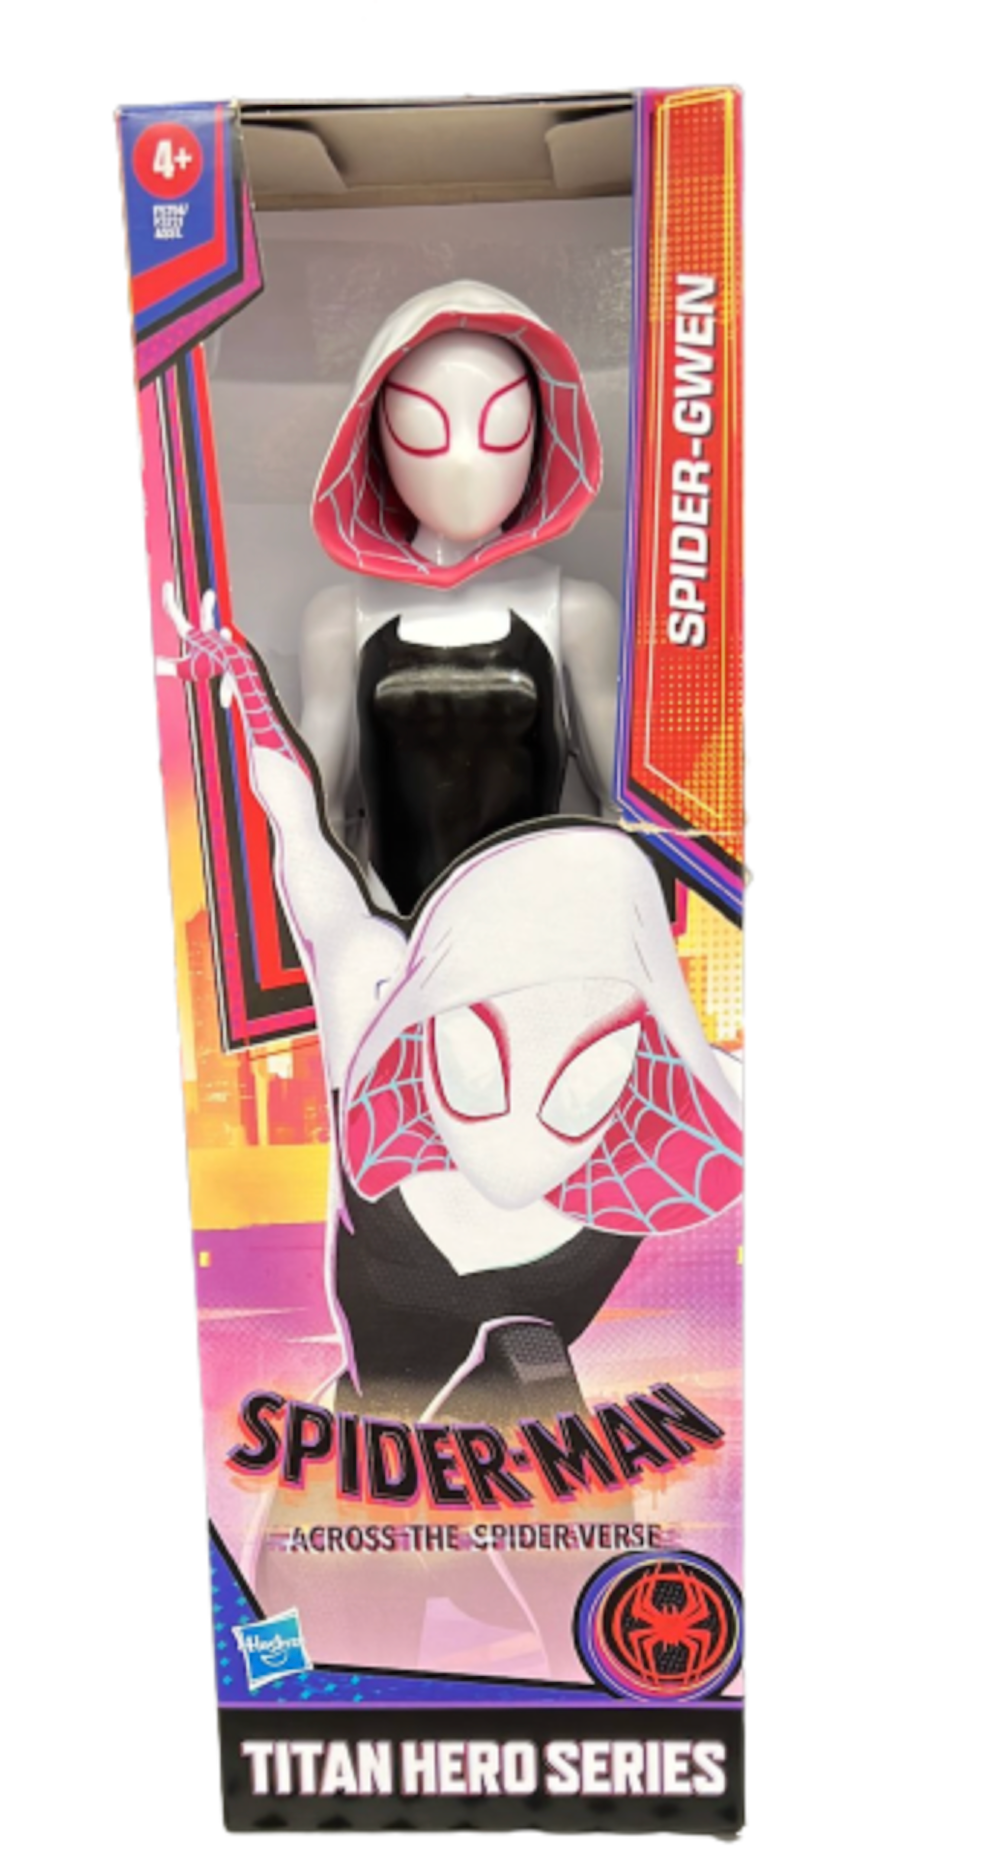 Spider-Man Titan Hero Series Spider-Gwen Action Figure Doll New with Box